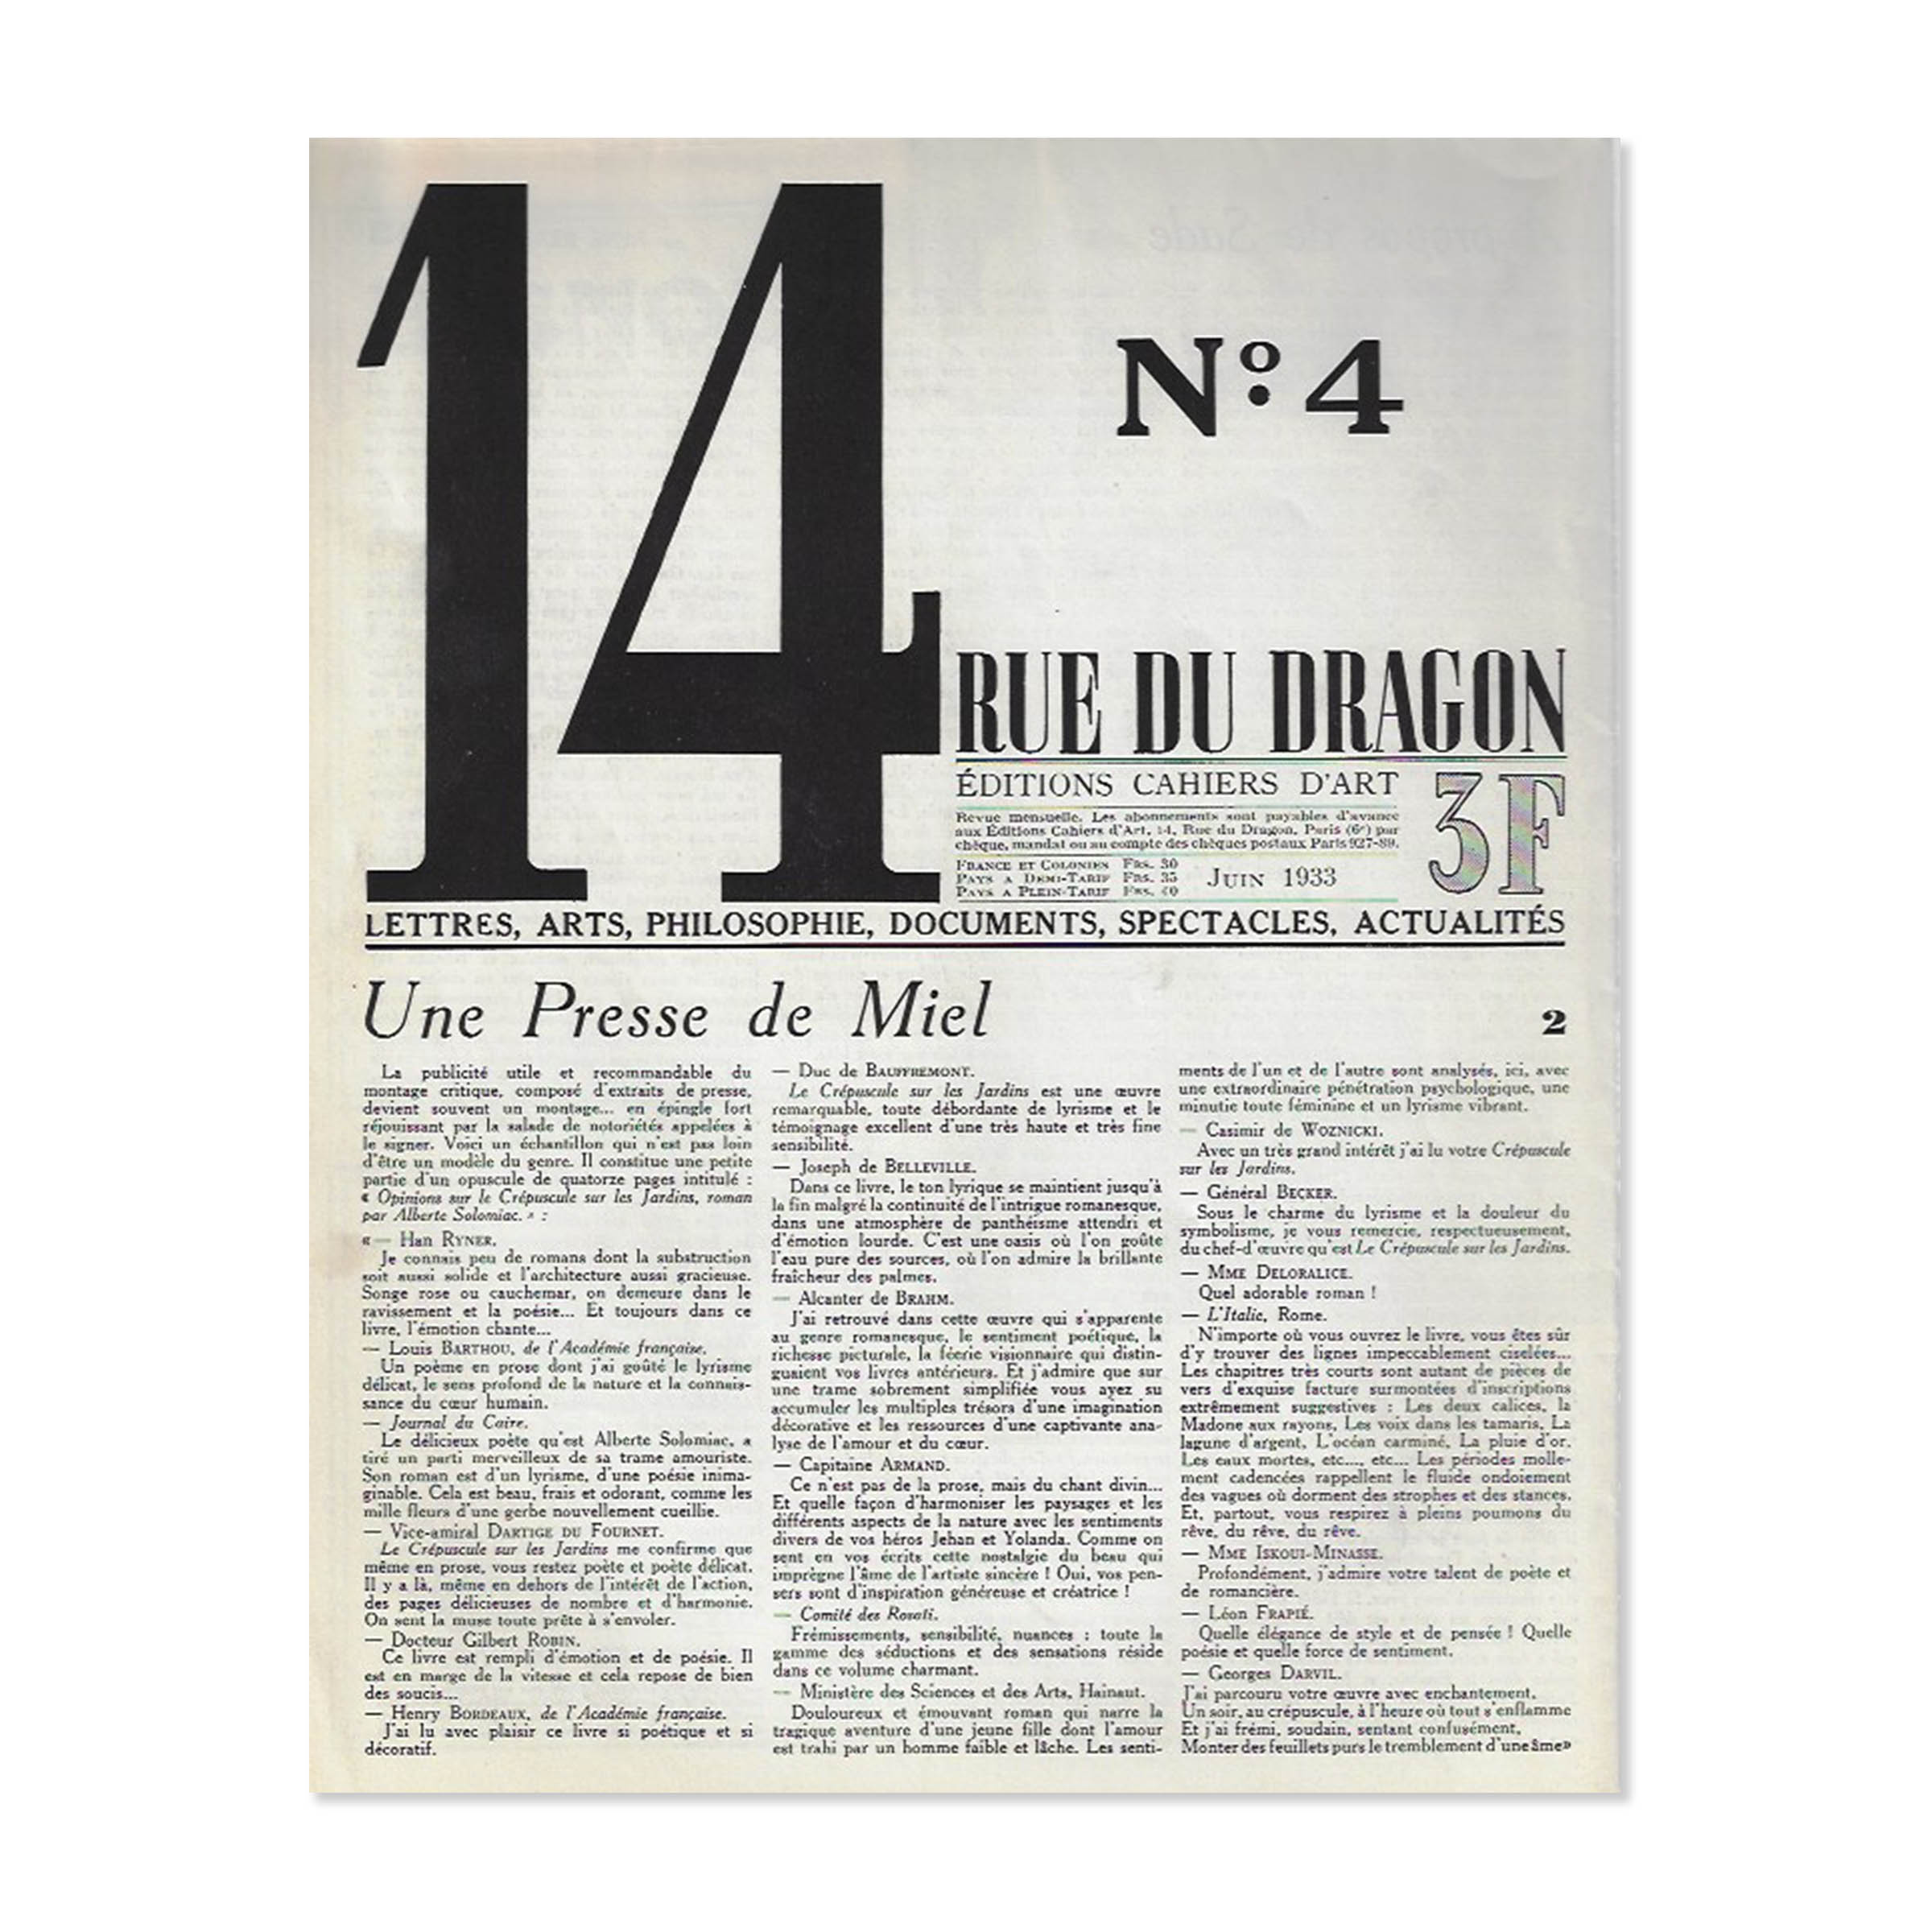 Revue 14 rue du Dragon. N°4. Cover view